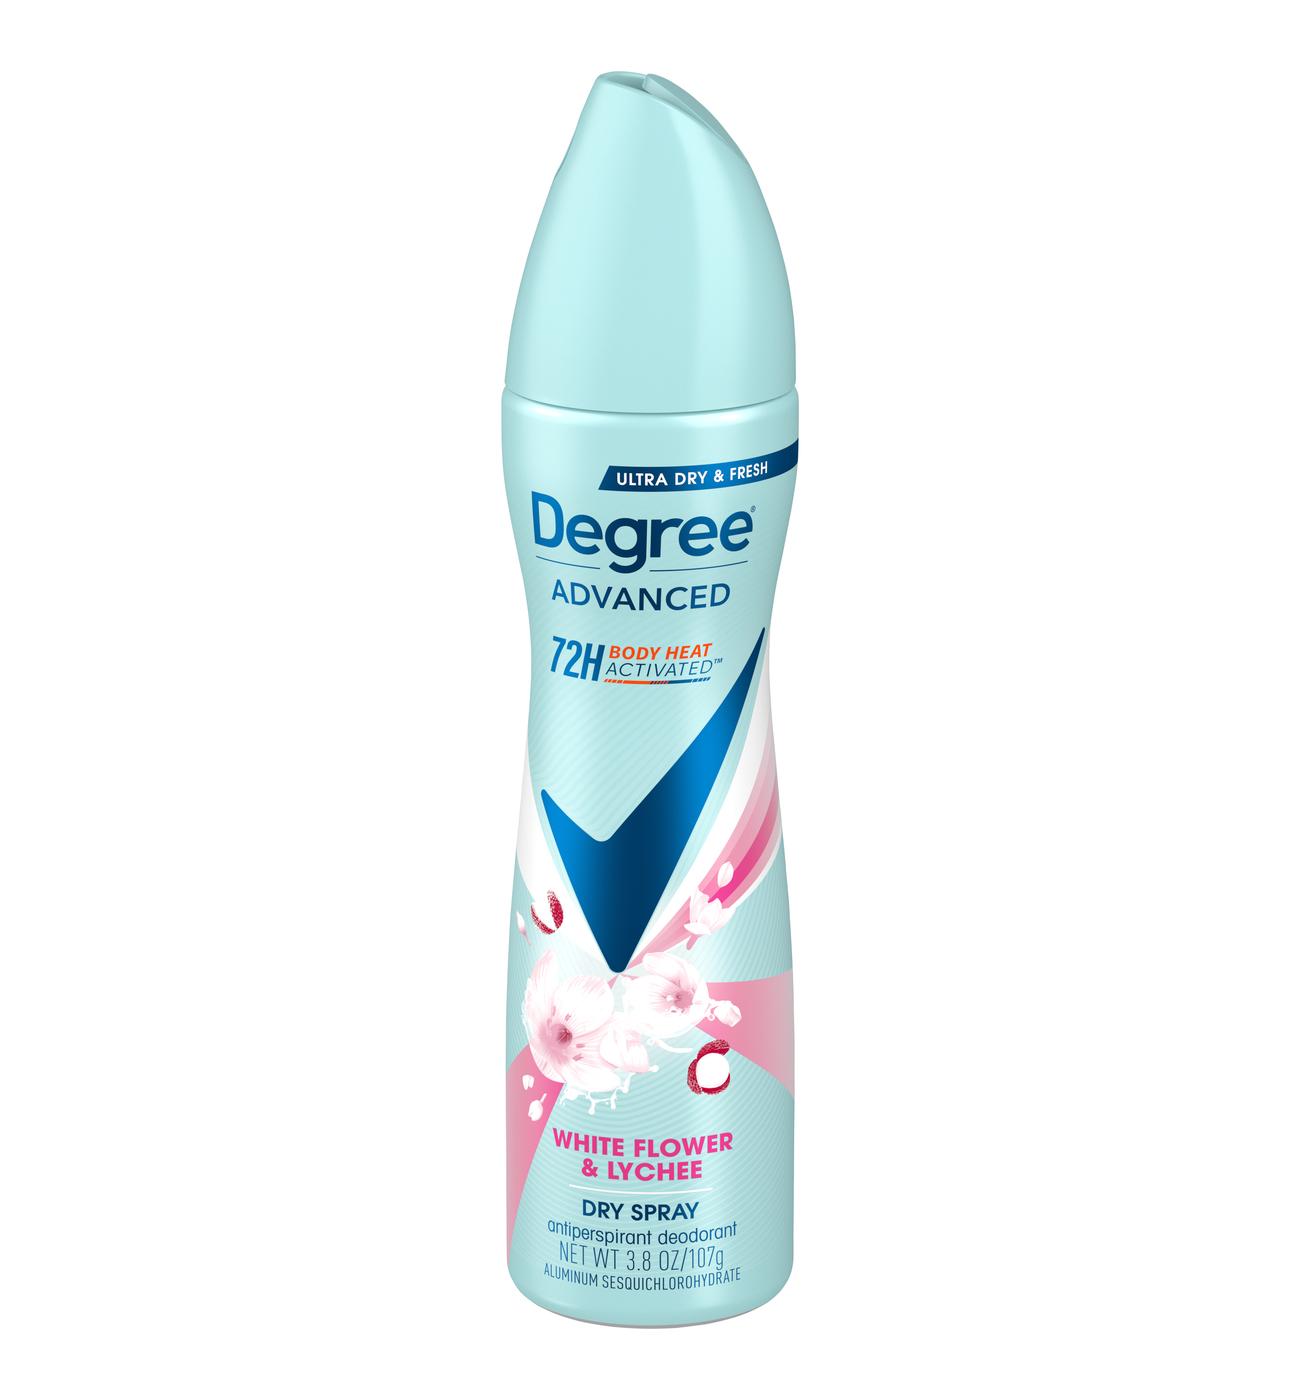 Degree Advanced Antiperspirant Deodorant Dry Spray White Flowers & Lychee; image 1 of 3